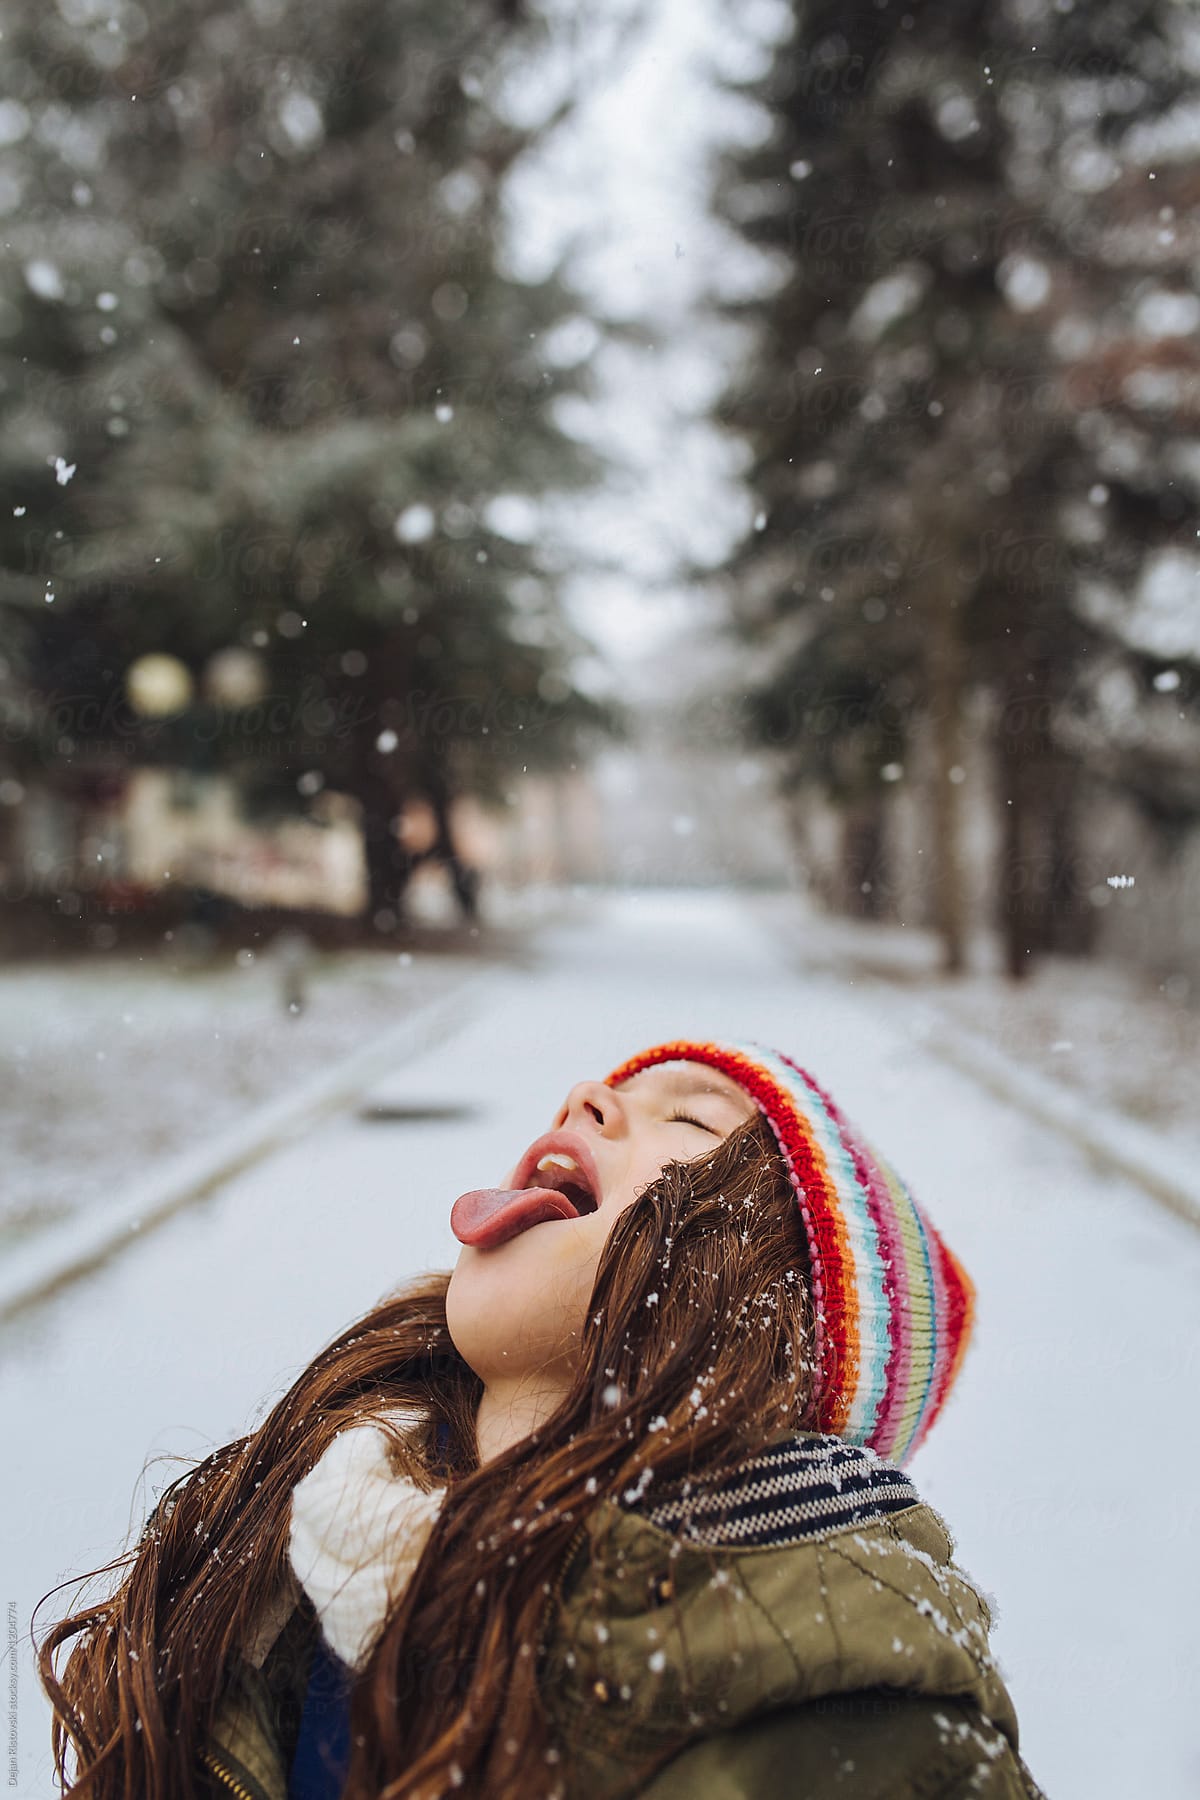 Girl enjoying snow on a snowy winter day.